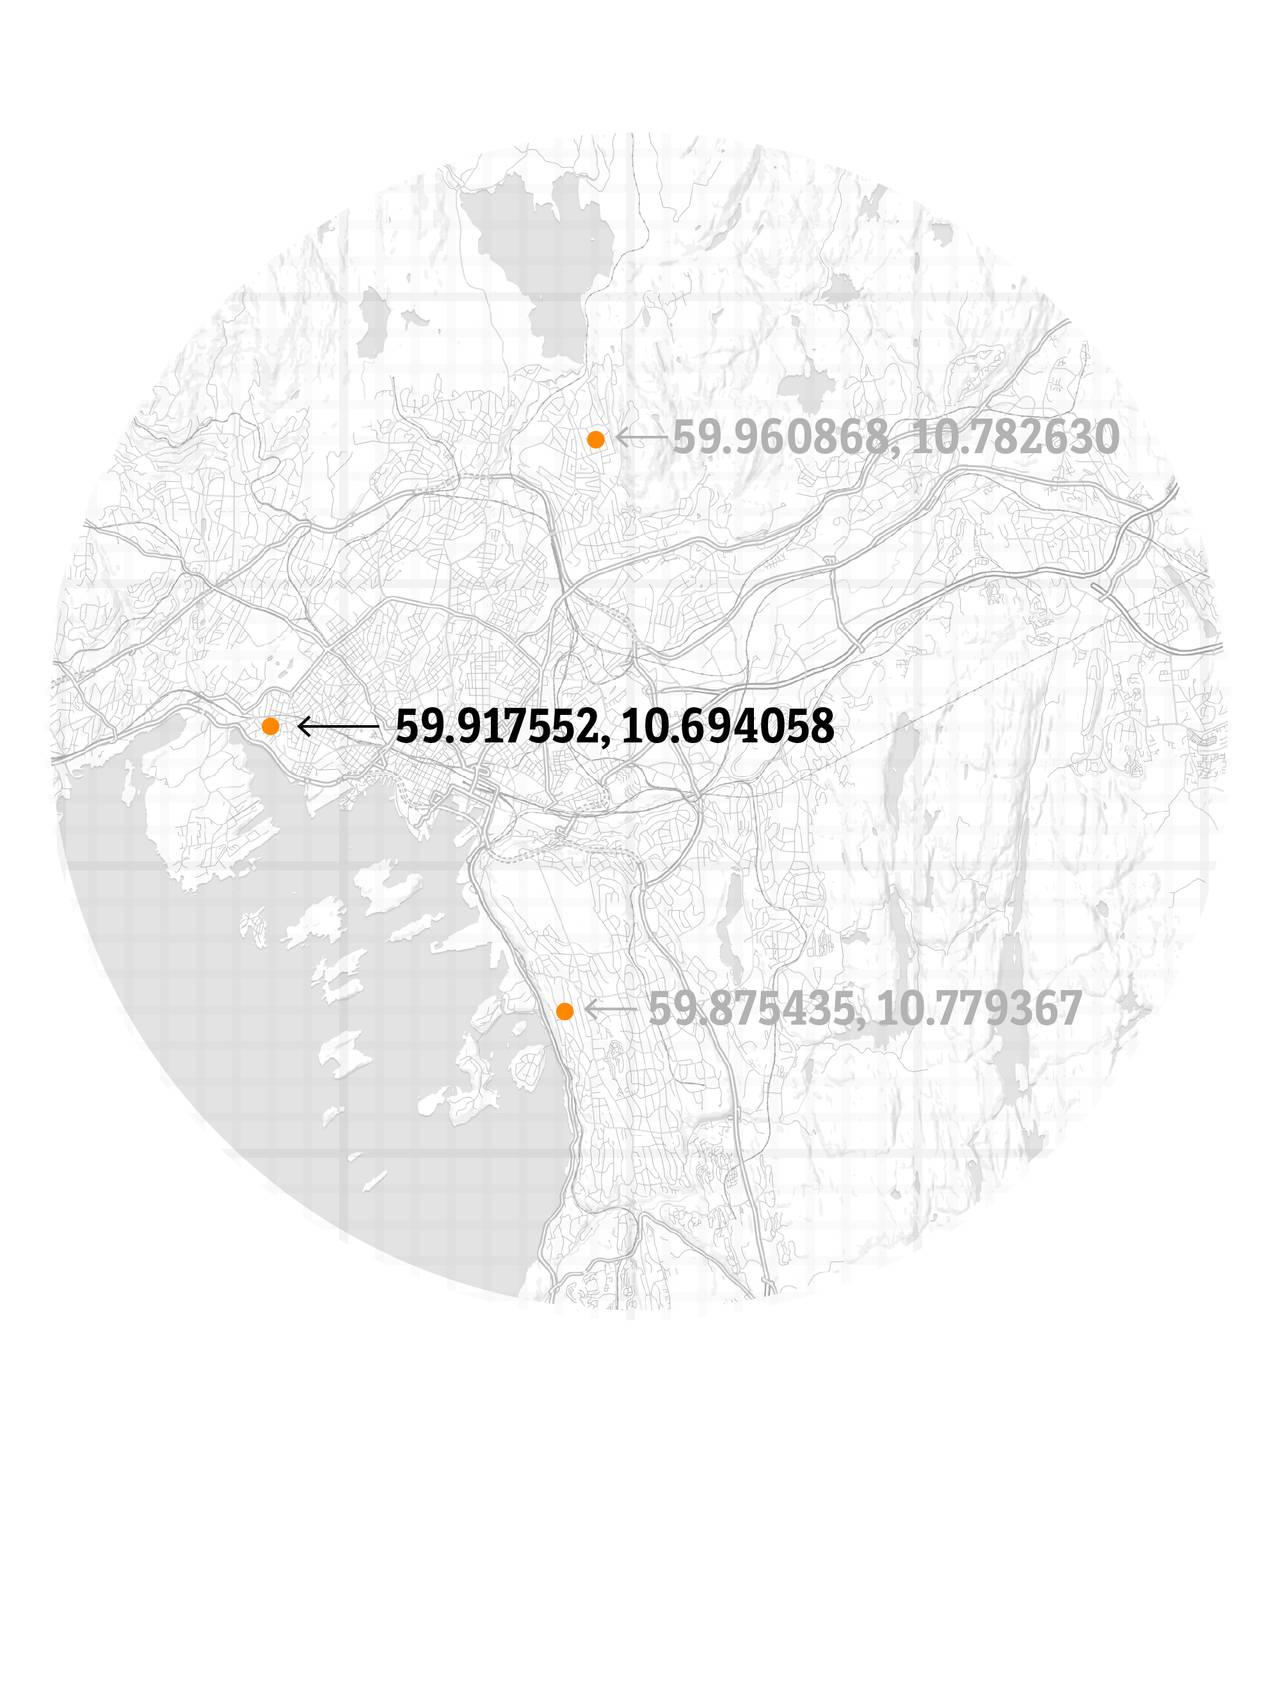 Kart med GPS-koordinater som oransje prikker.